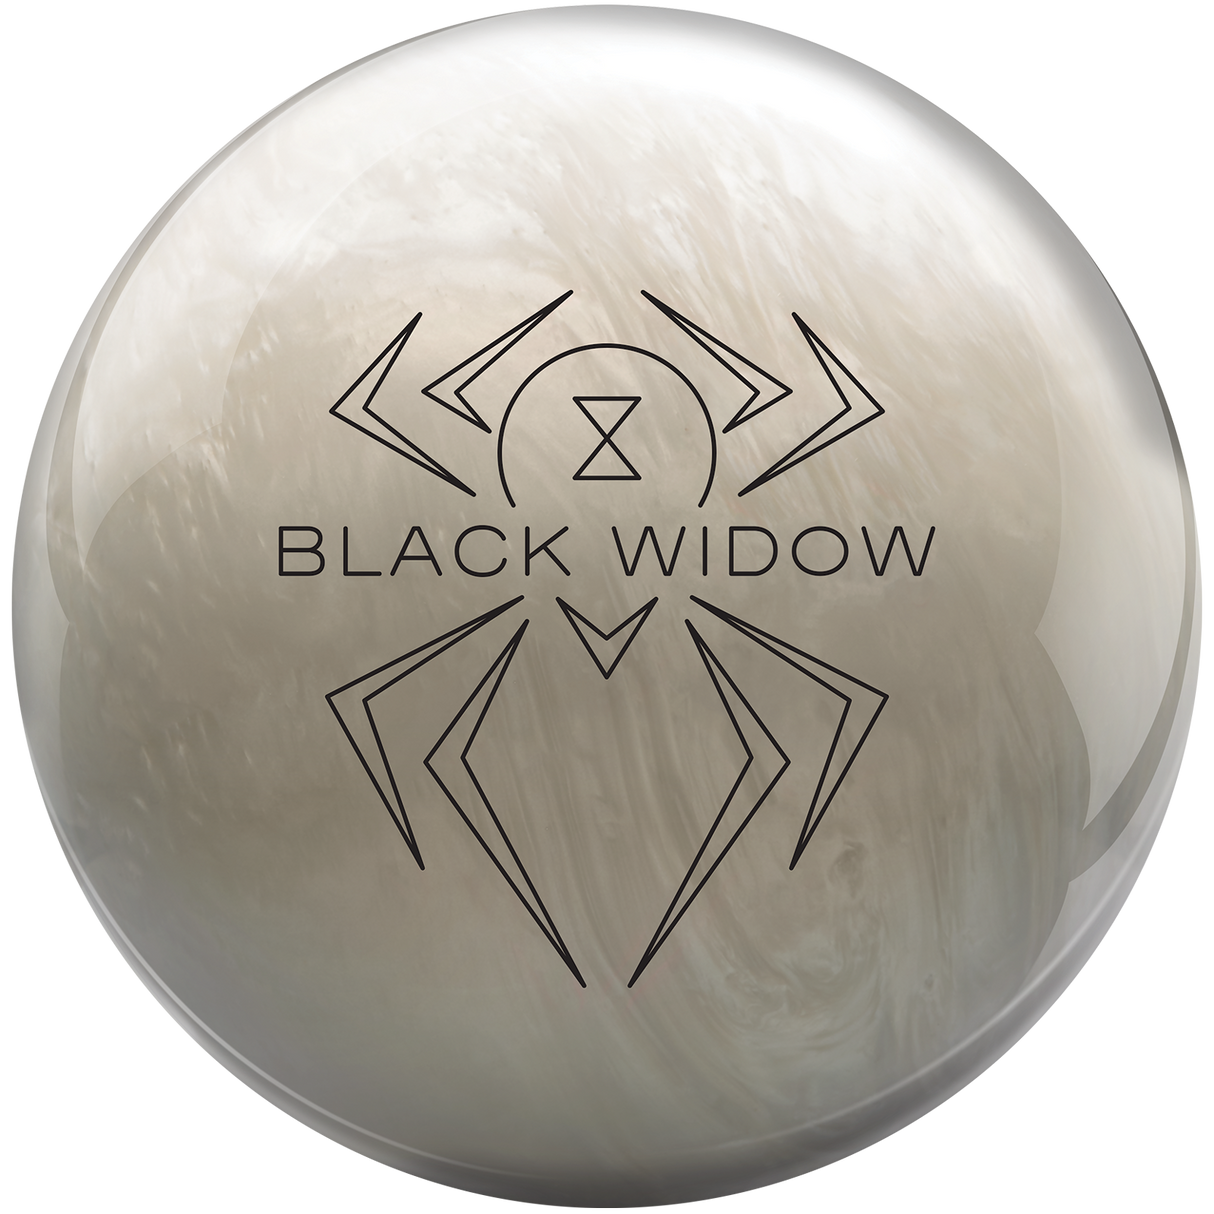 hammer-black-widow-ghost-pearl-bowling-ball